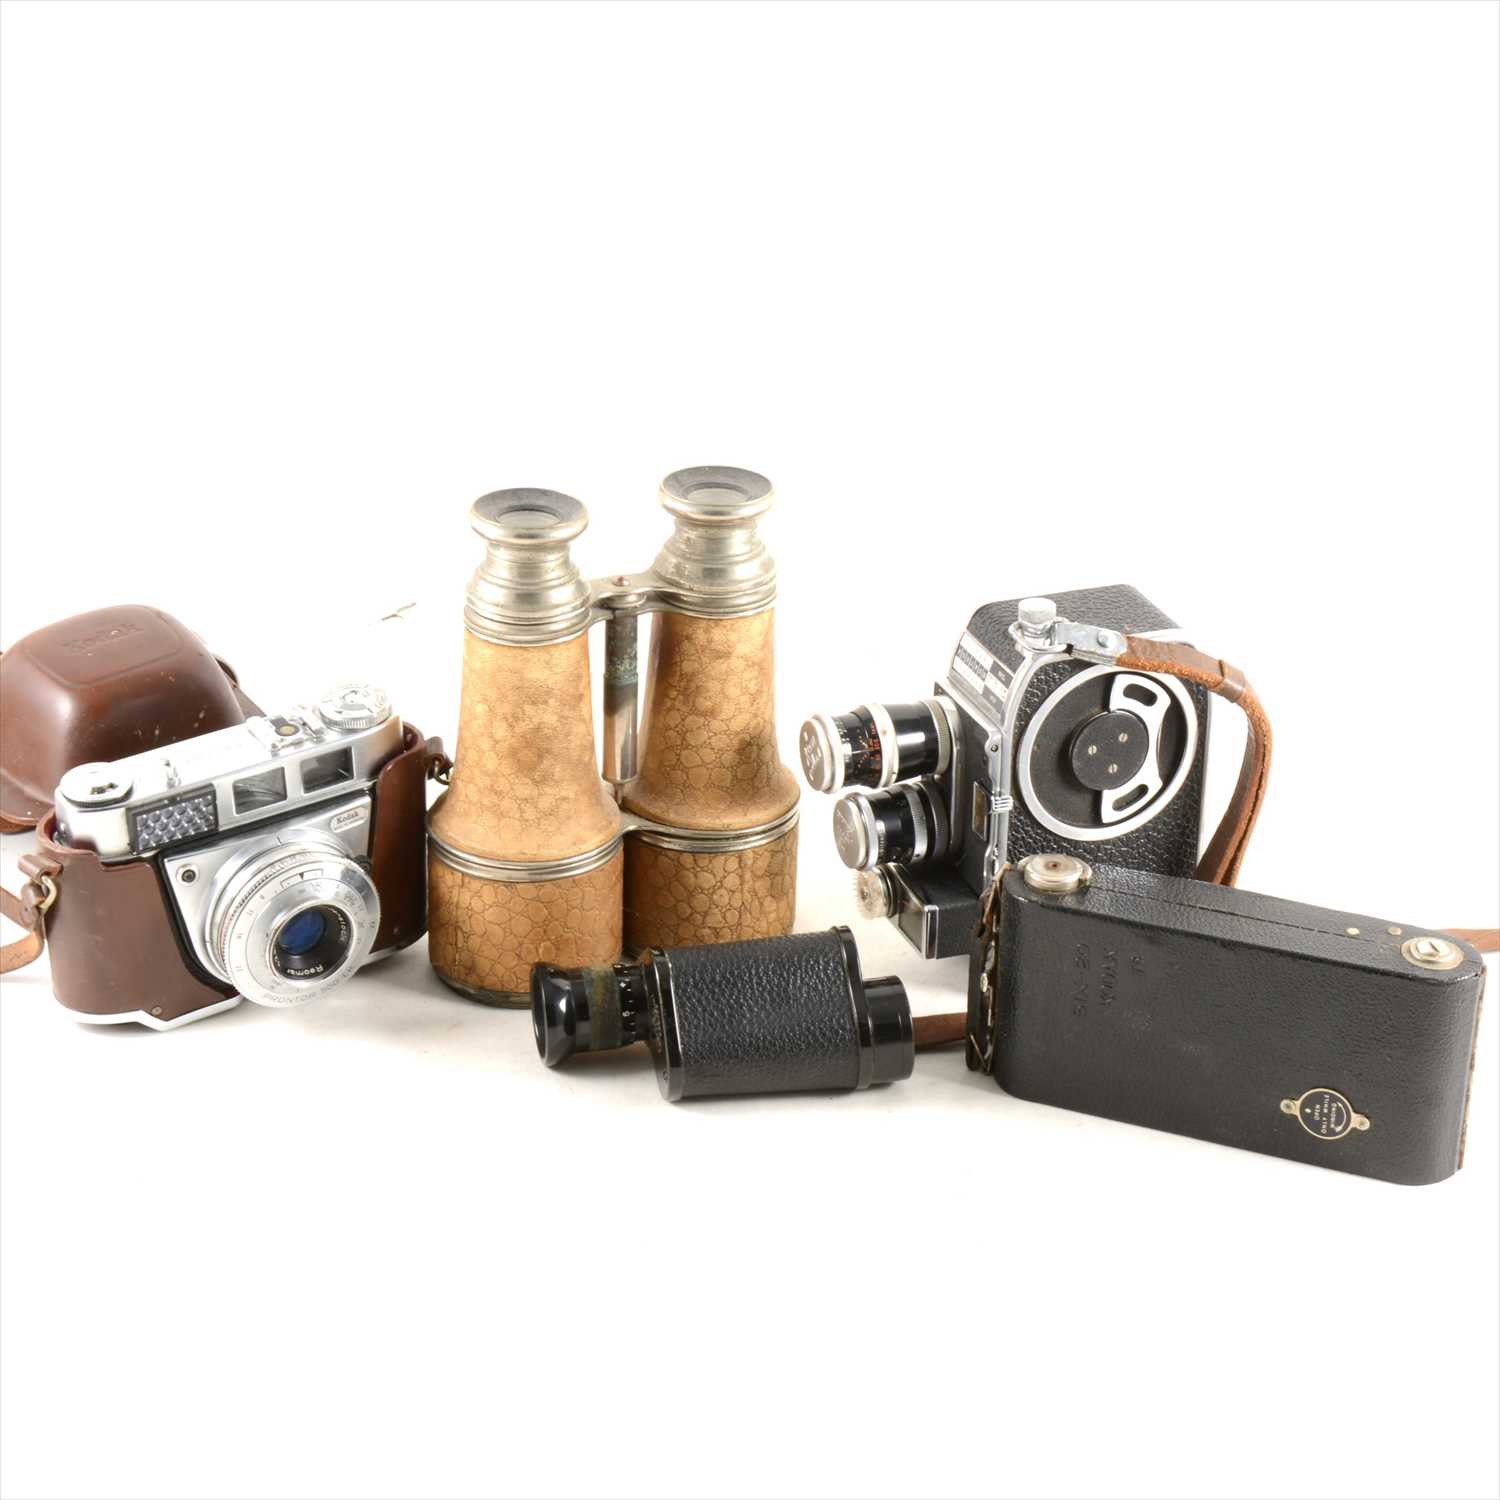 Lot 118 - A Zeiss 8x monocular field glass, binoculars, and other cameras